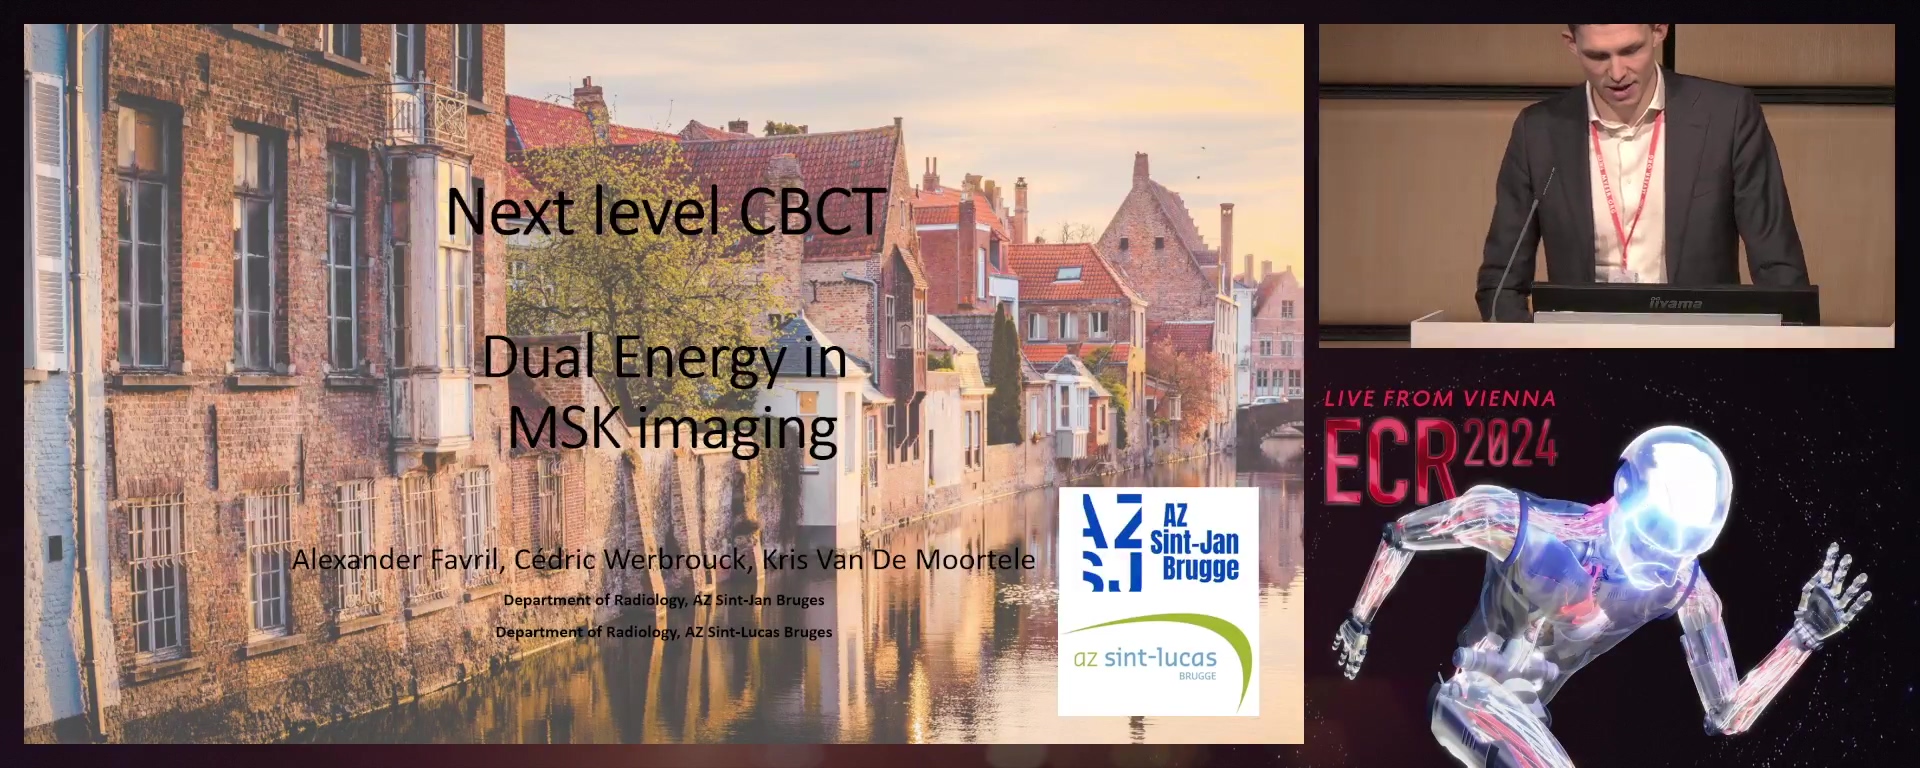 Next Level CBCT: DUAL ENERGY in MSK Imaging